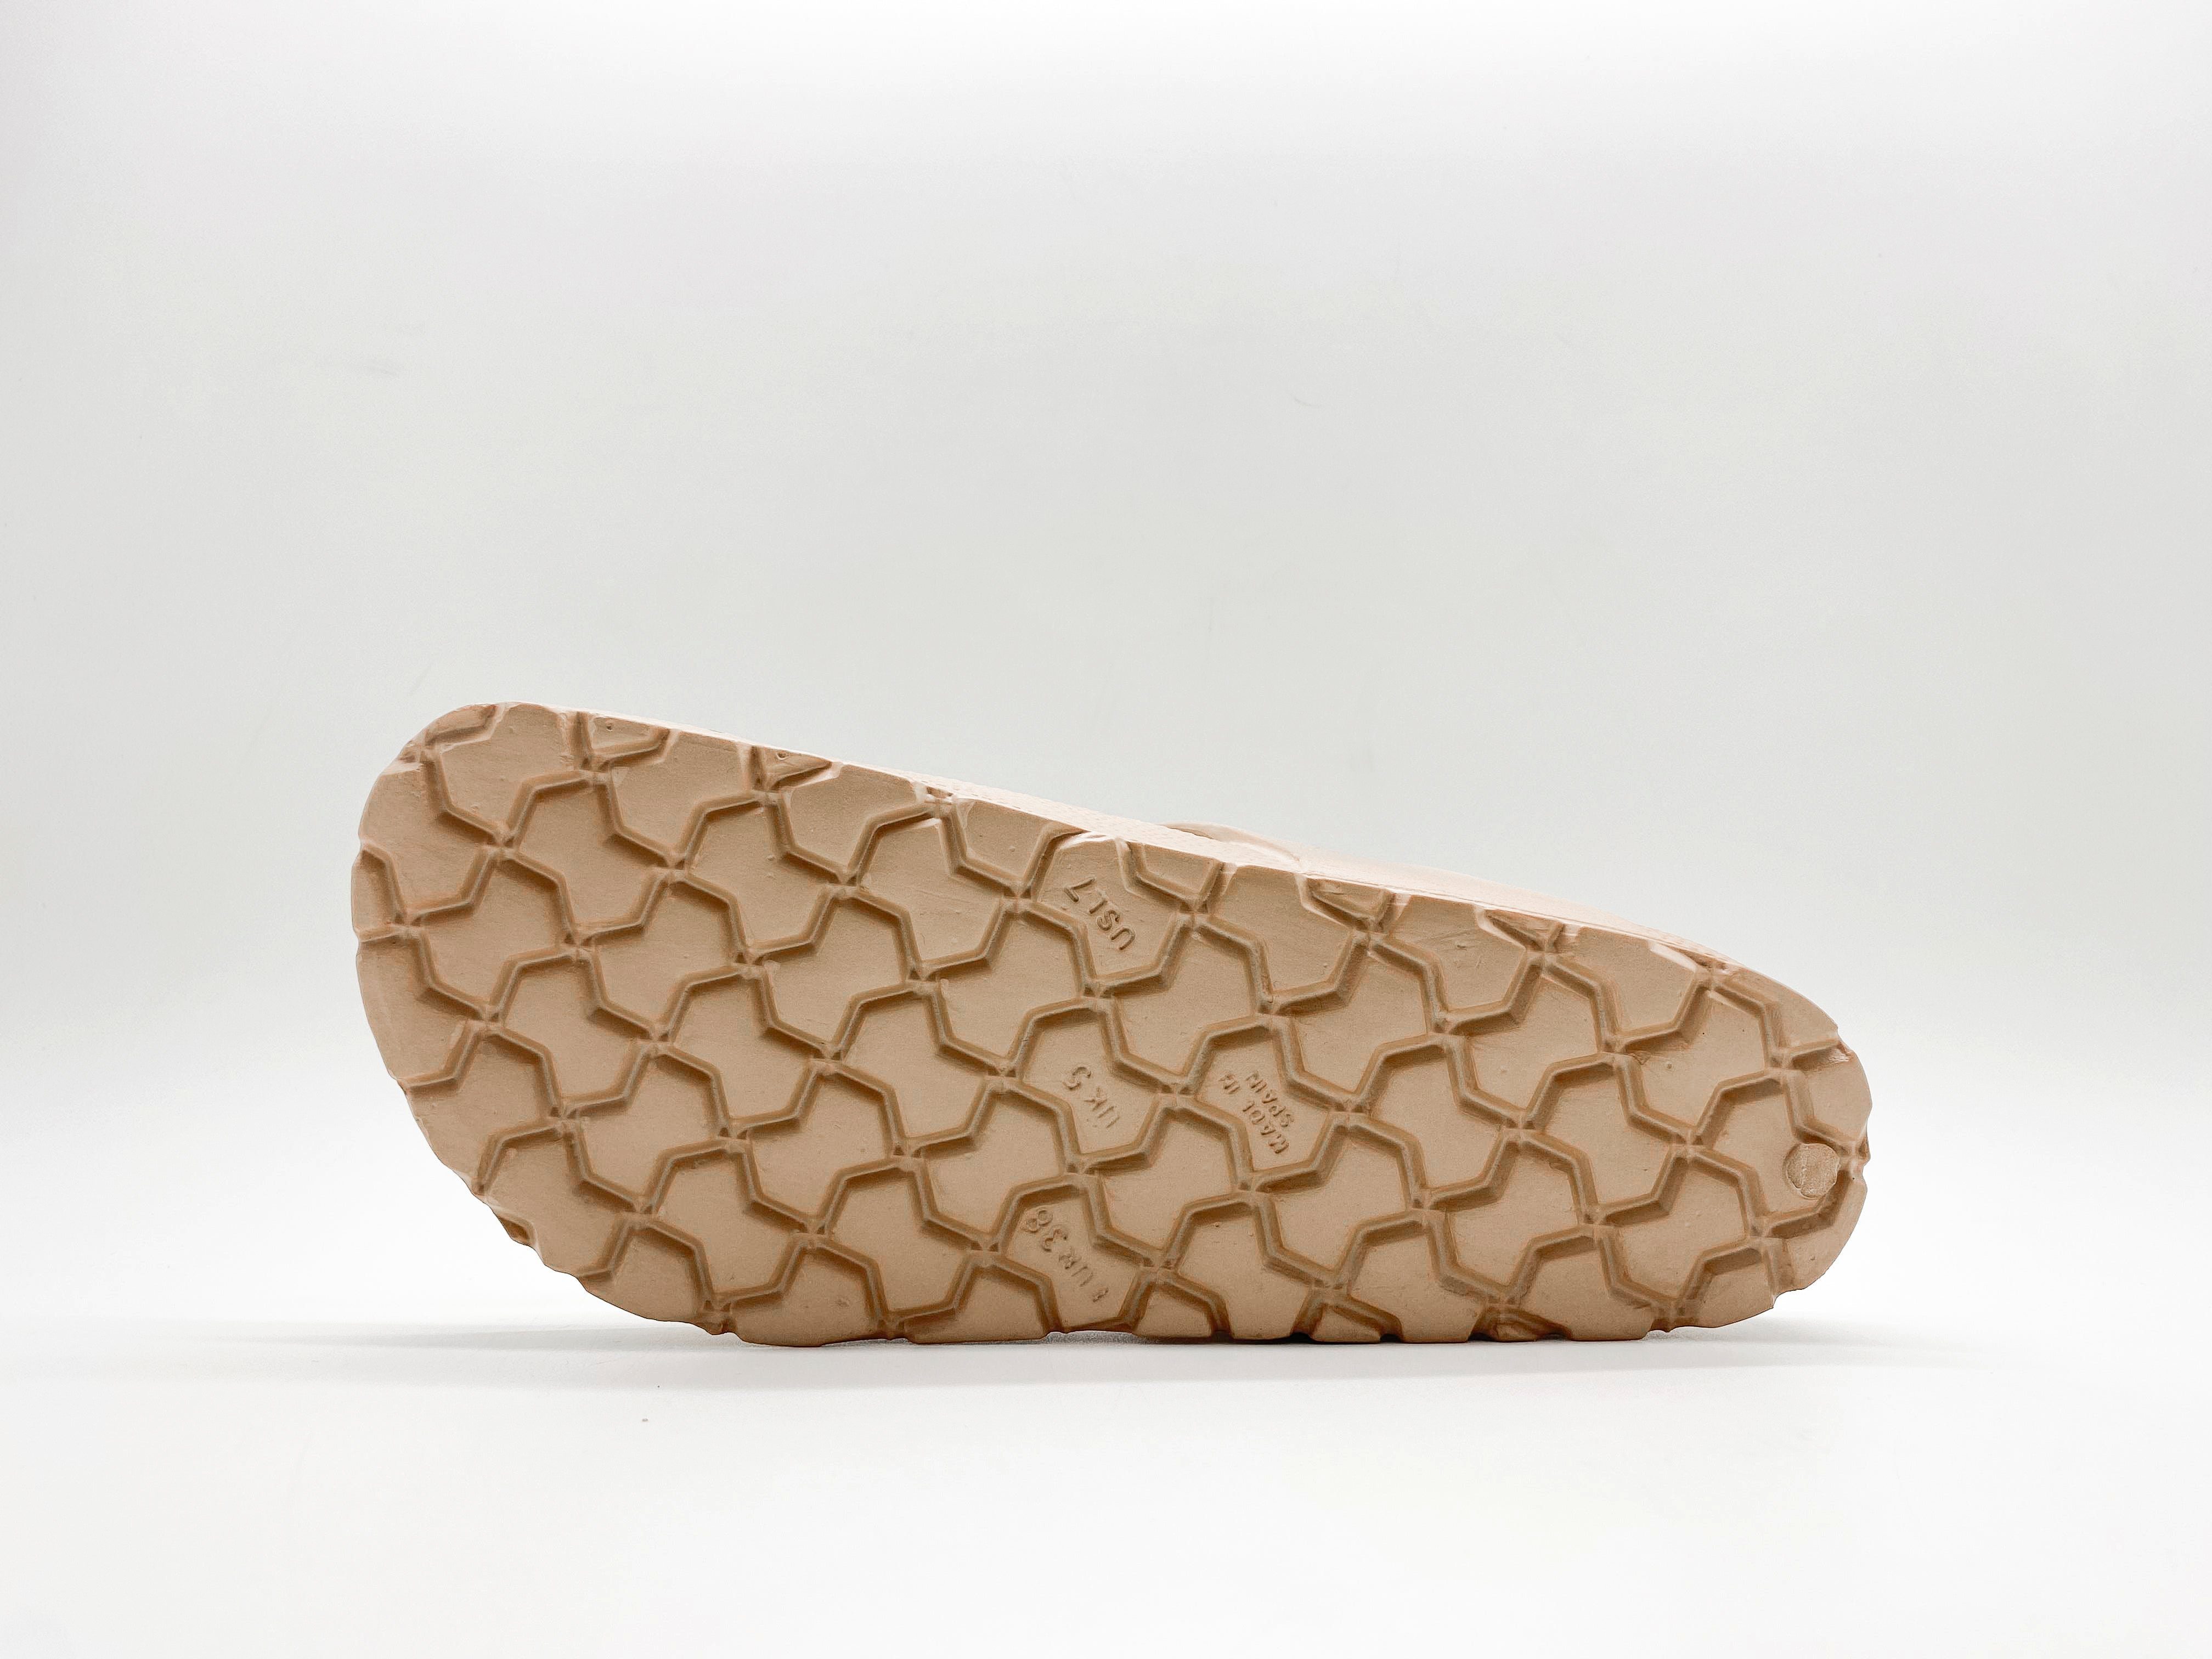 thies Bronze Vegan Ecofoam Sandal Sandale Thong 1856